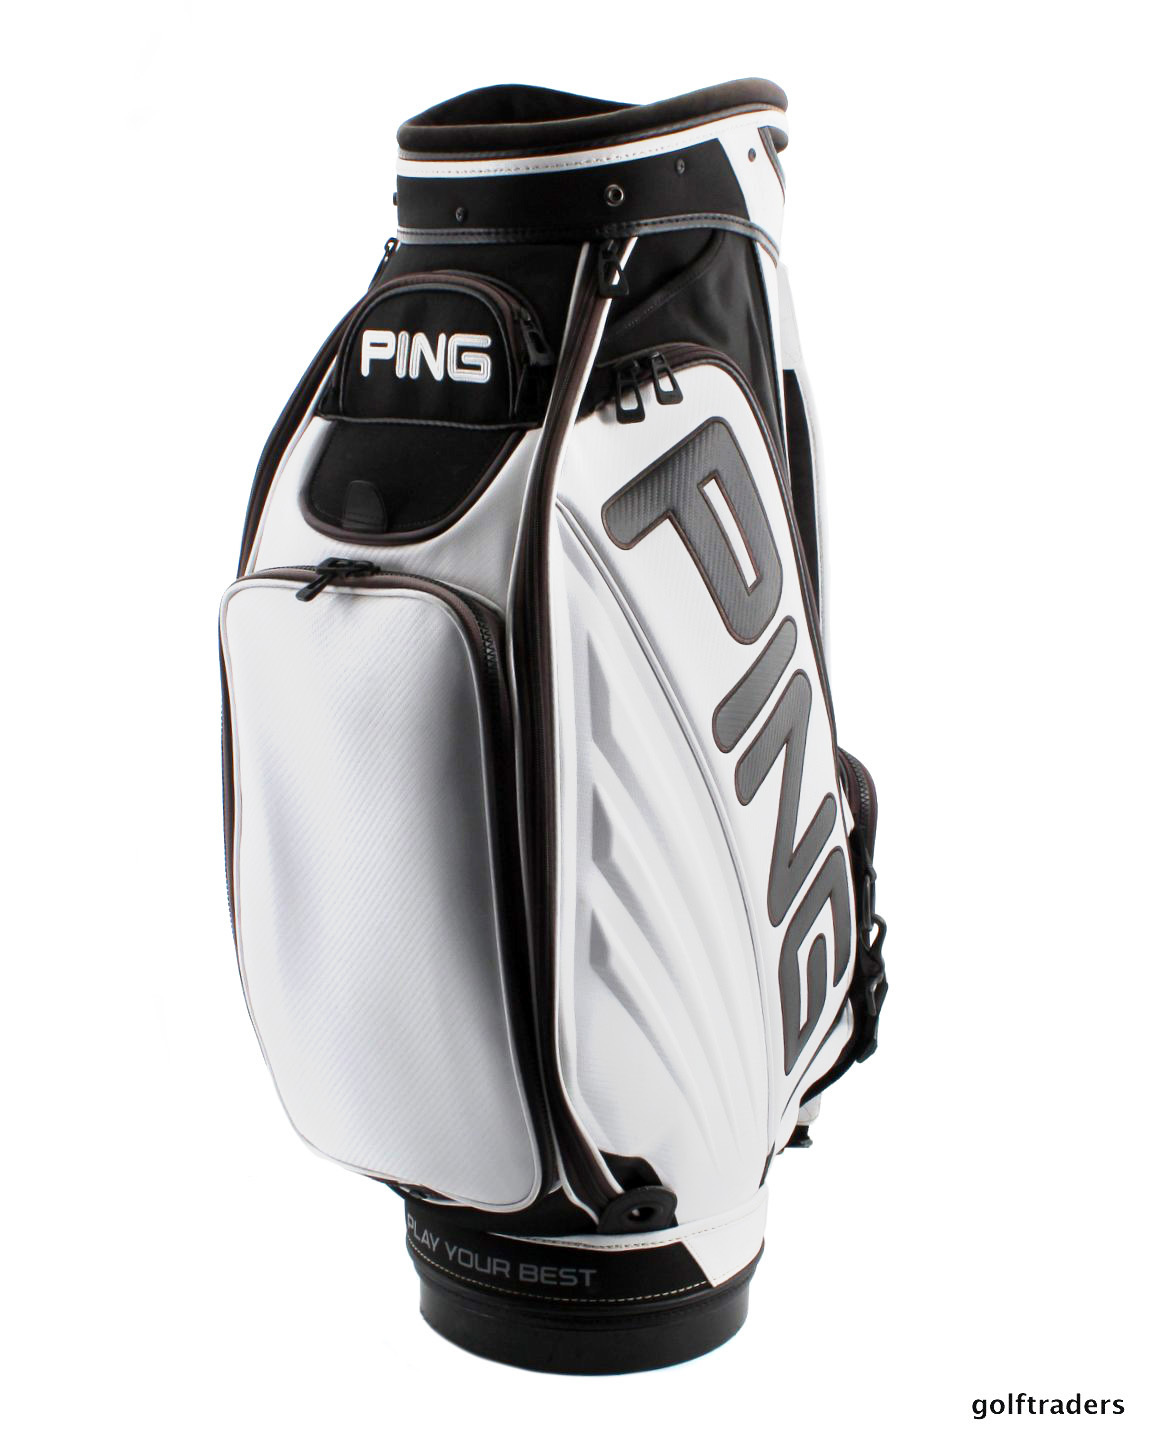 Ping Golf Bag Australia